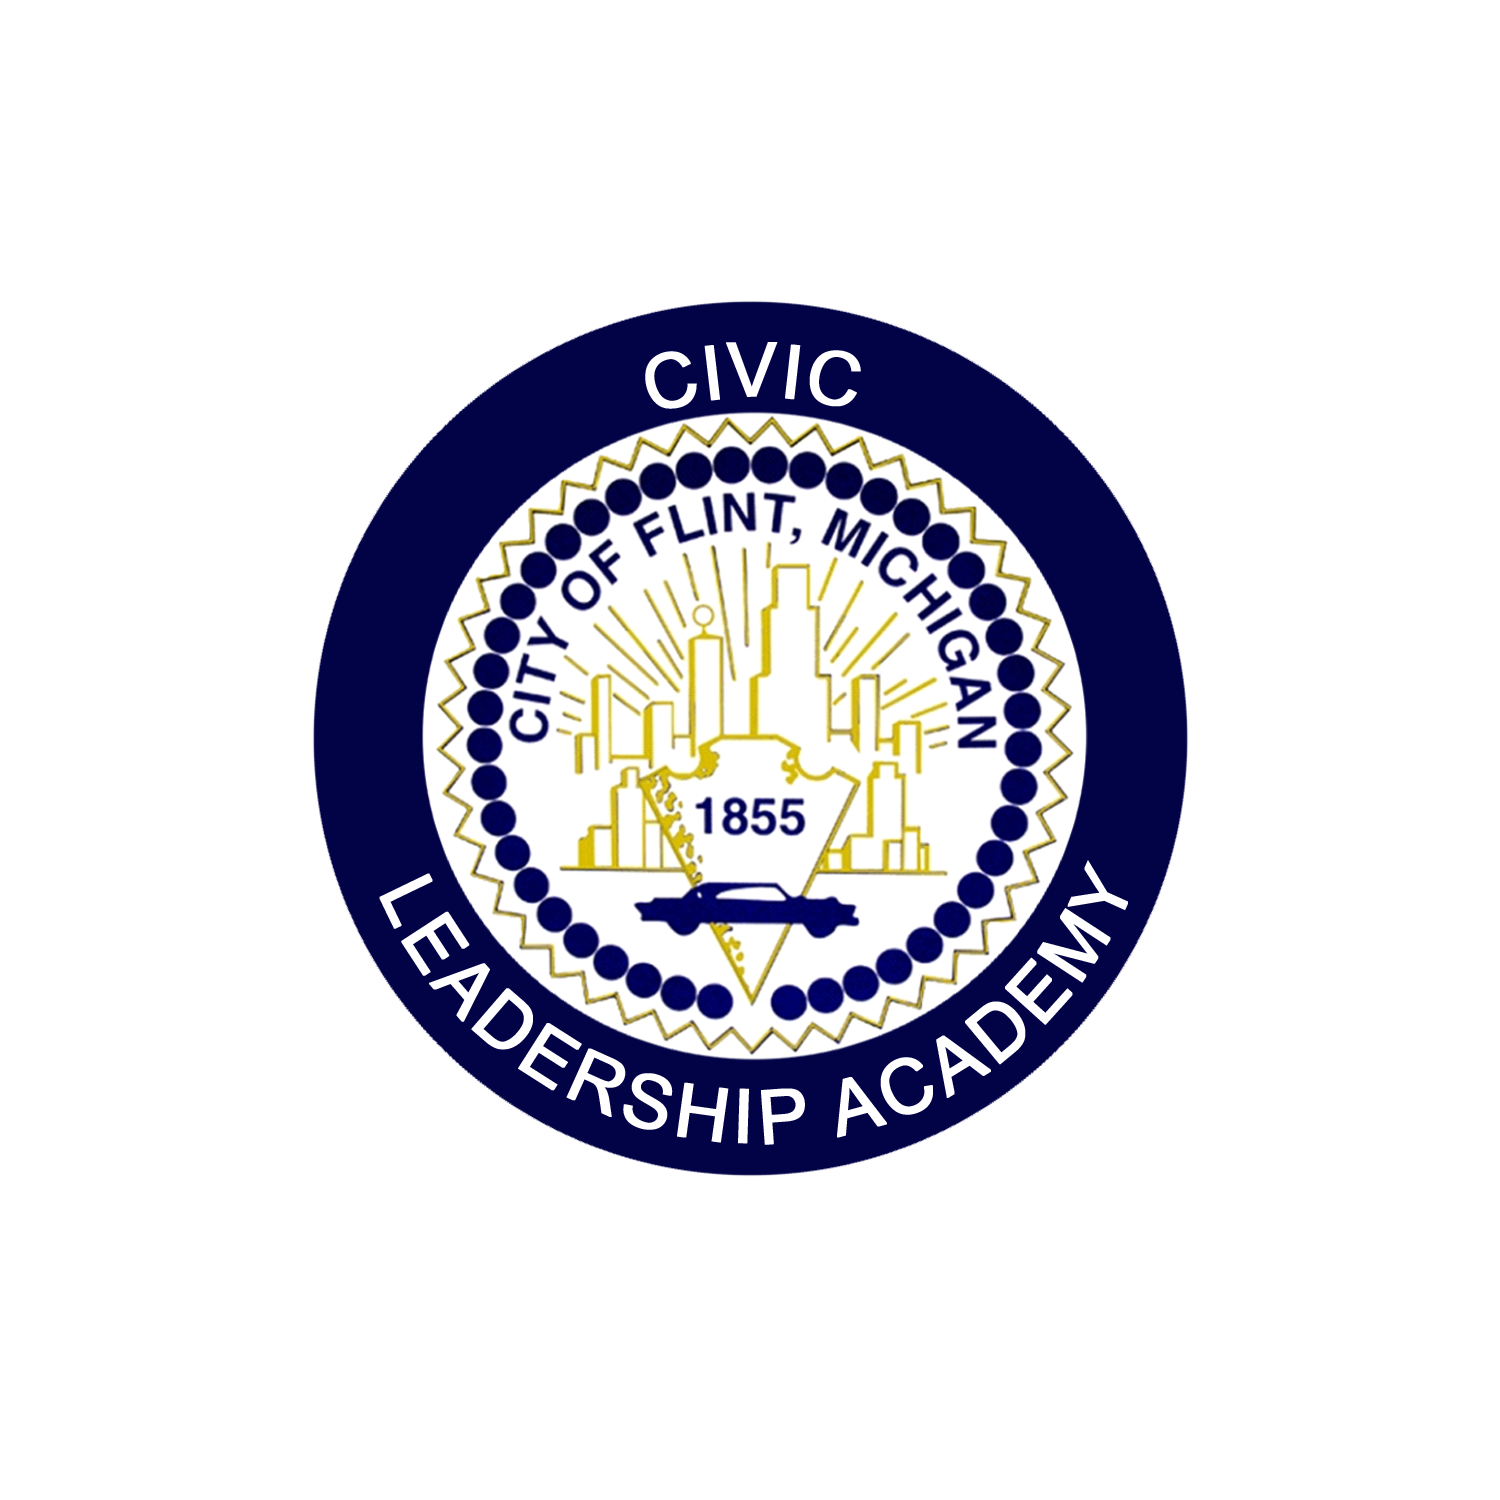 CIVIC Leadership